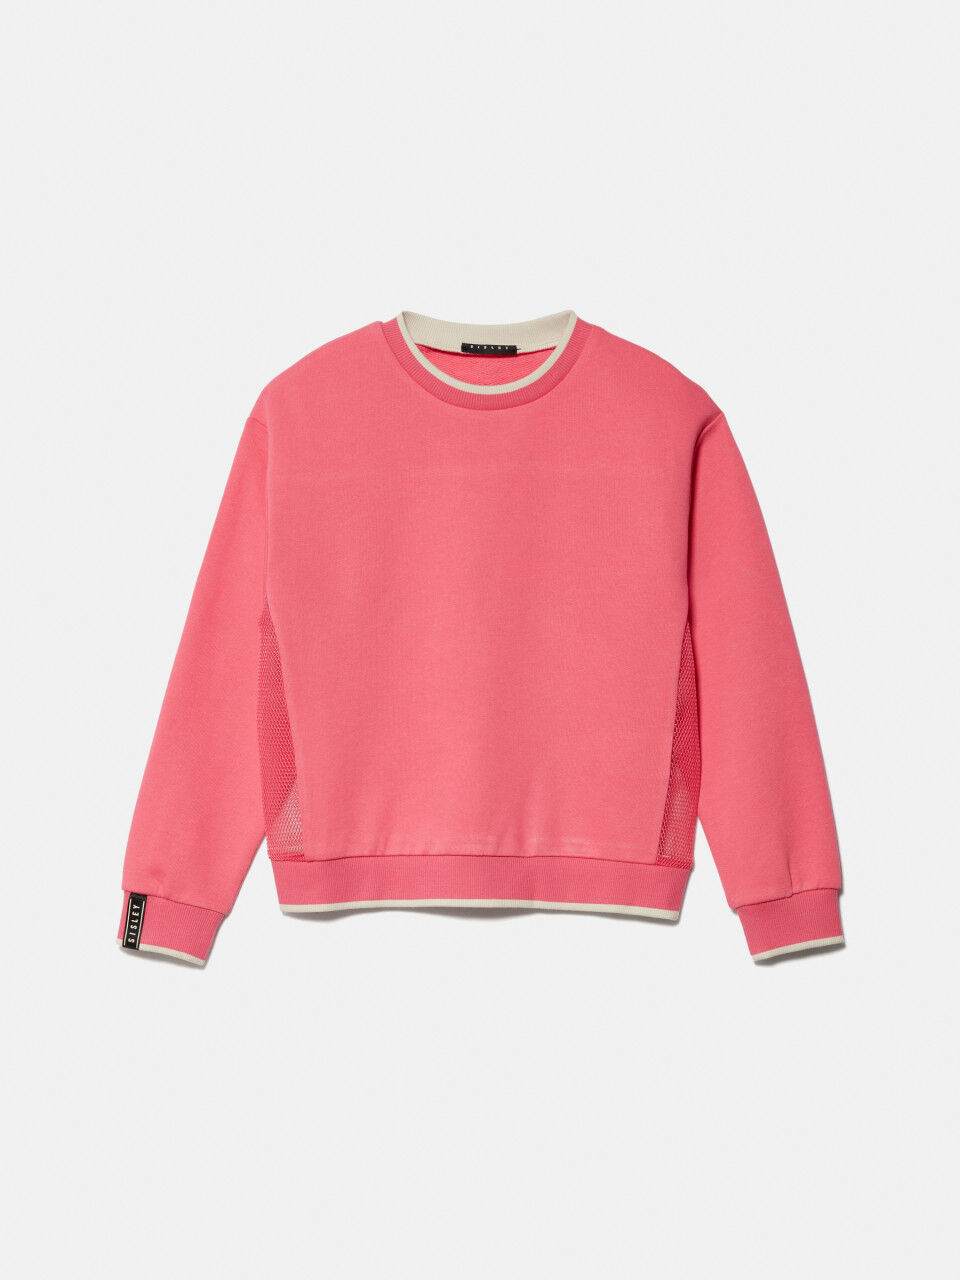 Pullover sweatshirt with mesh